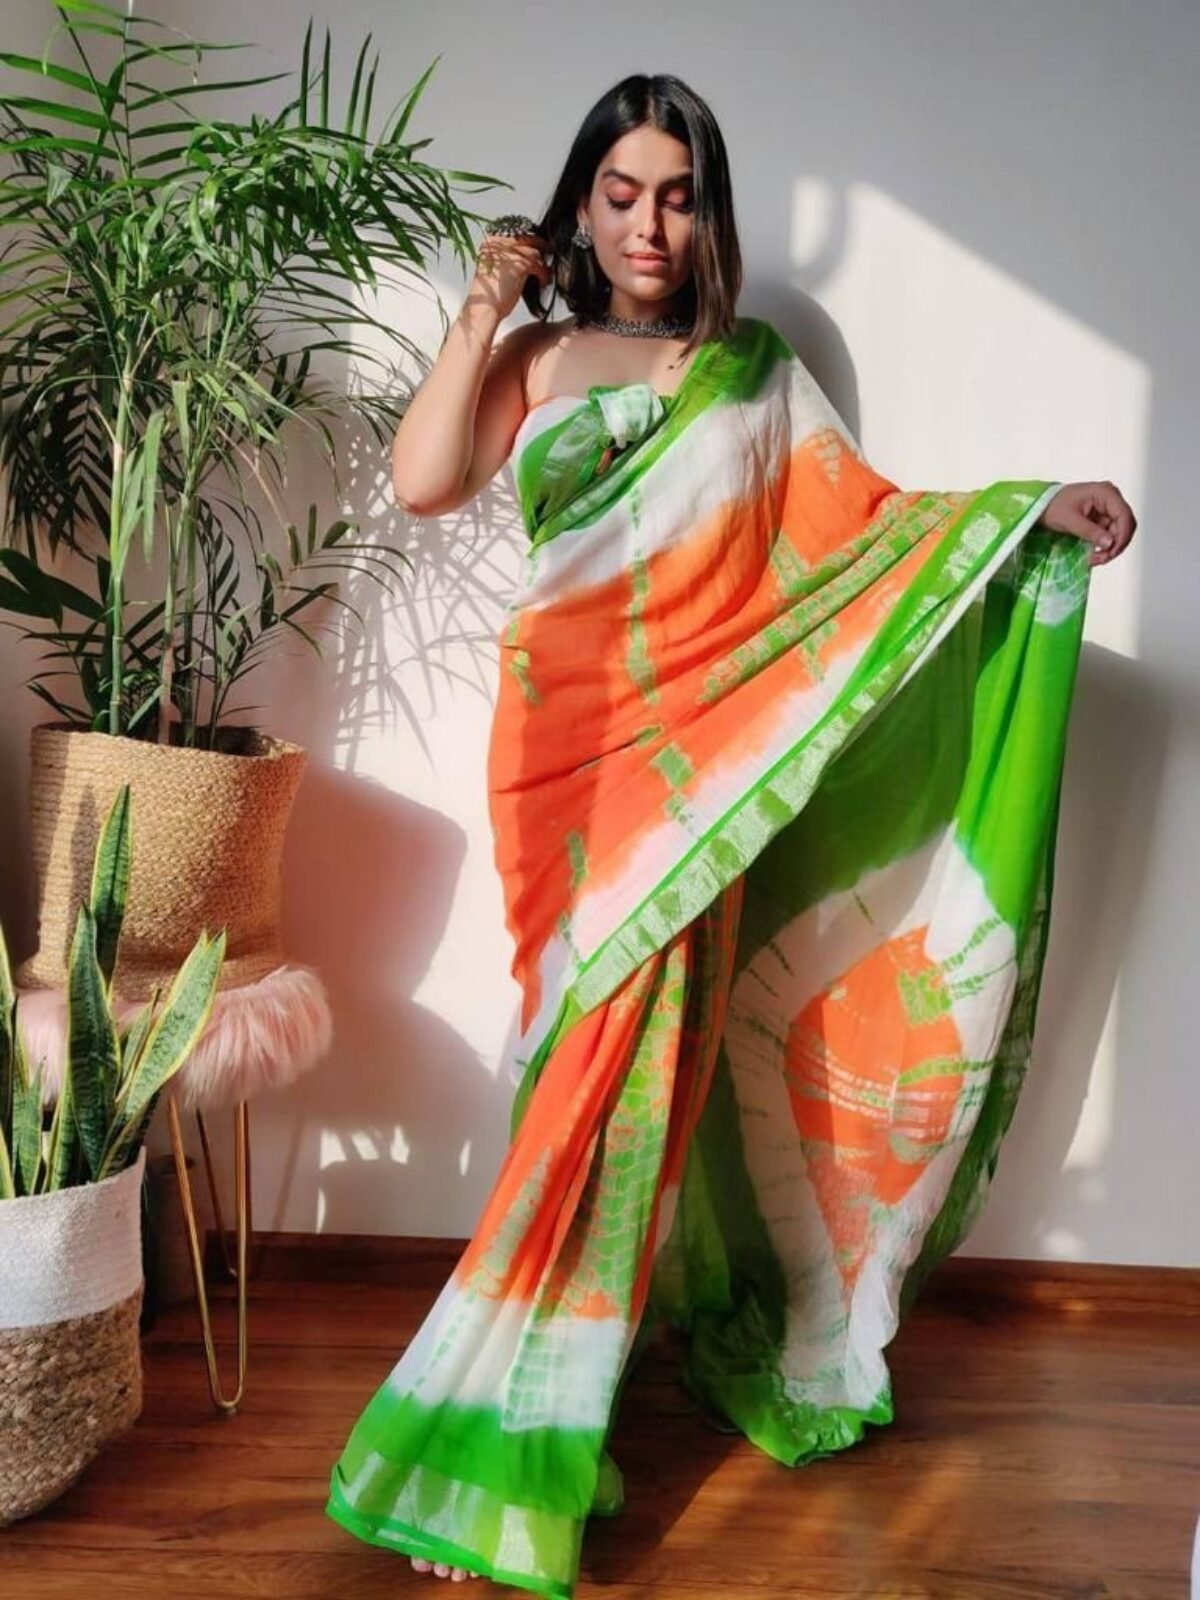 Independence Day Special: Kalamkari, Creating Art On Fabric